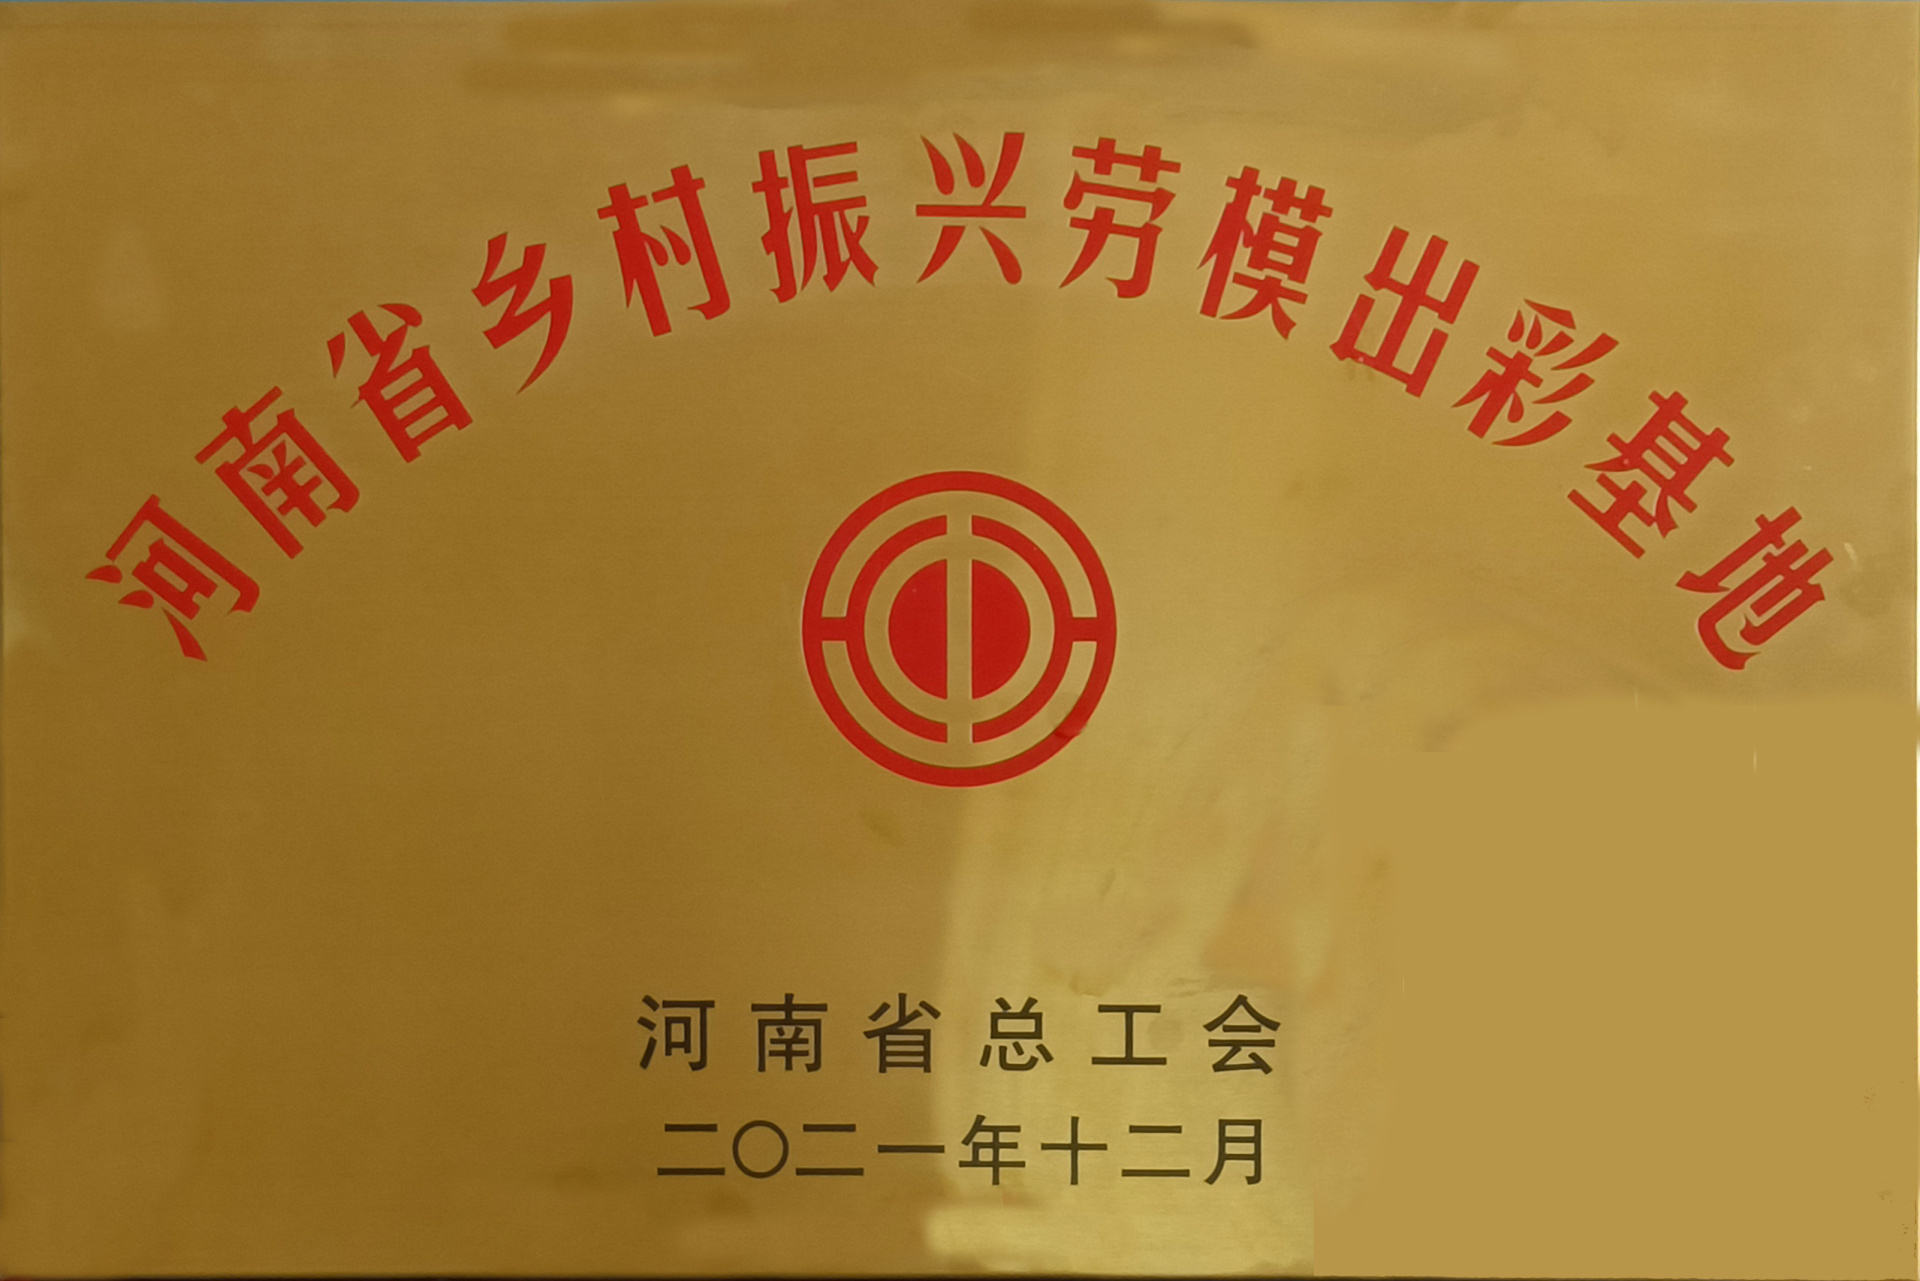 2021年12月，河南省总工会授予“河南省乡村振兴劳模出彩基地”